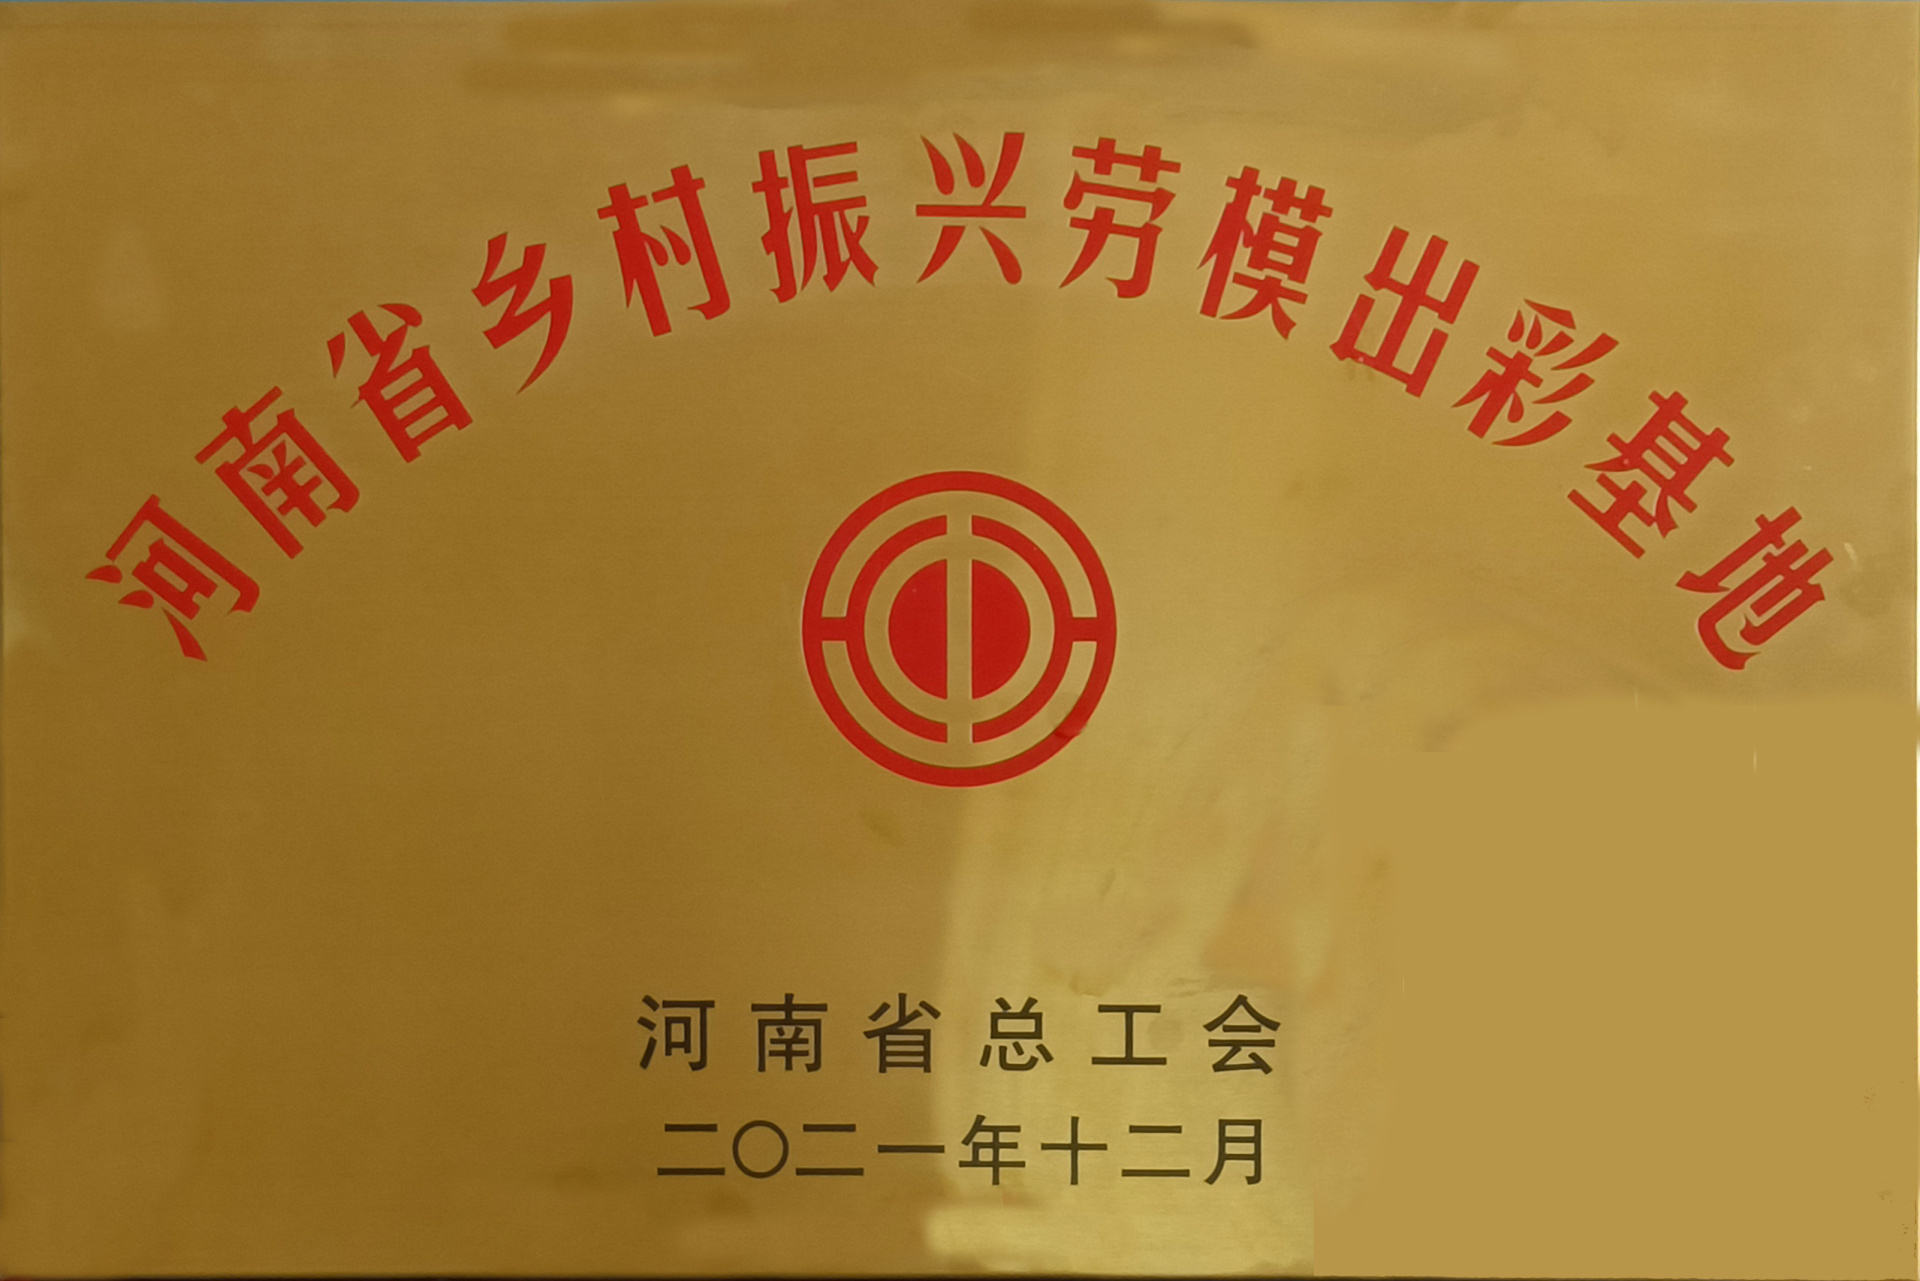 2021年12月，河南省总工会授予“河南省乡村振兴劳模出彩基地”